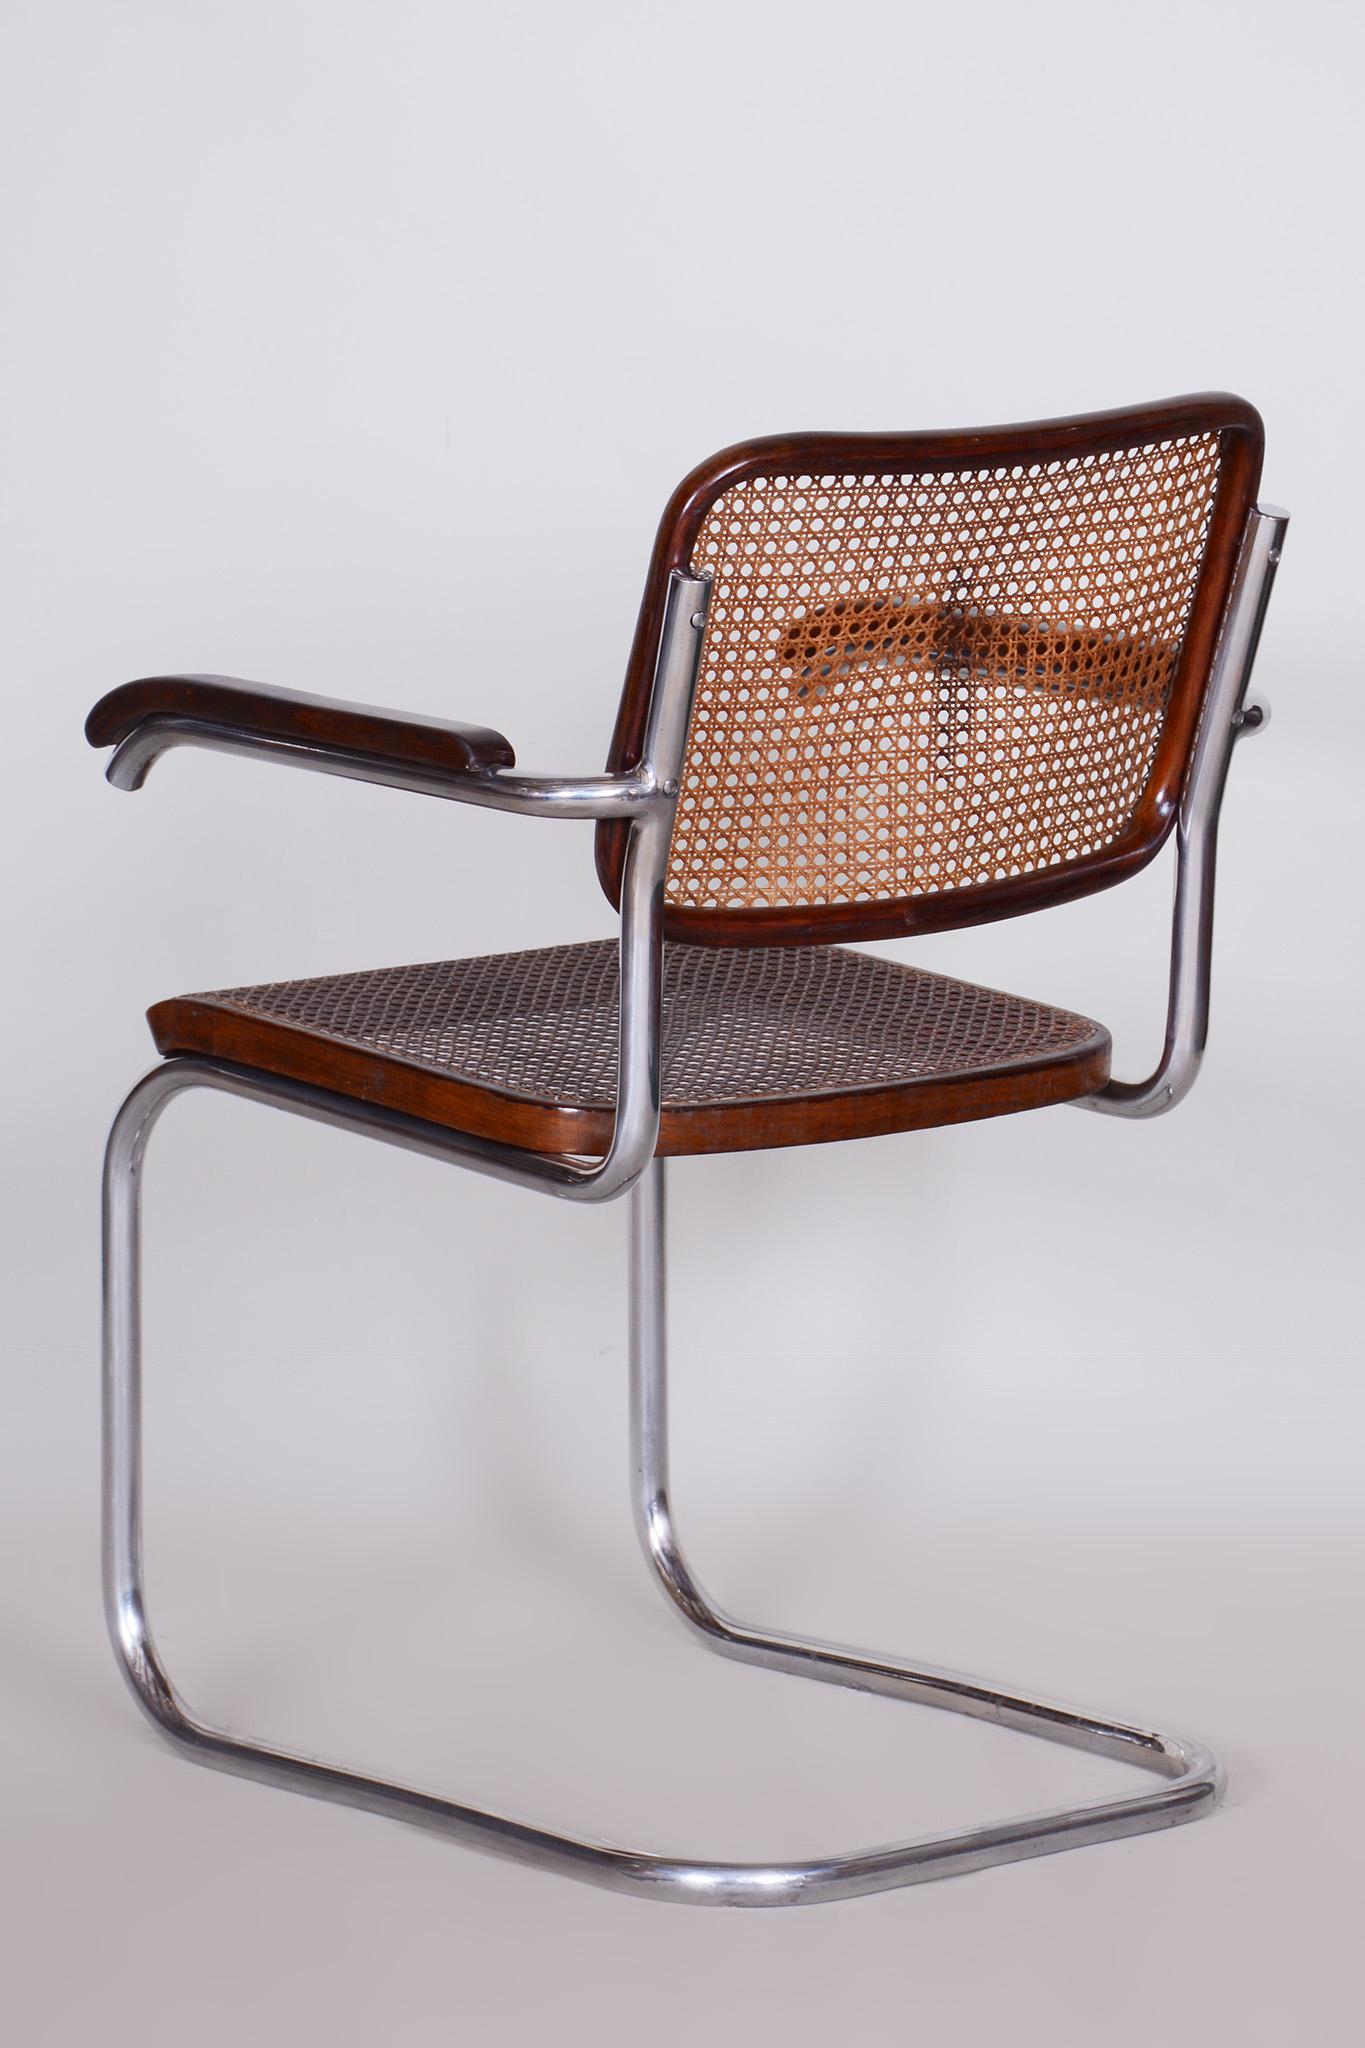 Restored Bauhaus Armchair, Marcel Breuer, Thonet, Beech, Chrome, Germany, 1930s For Sale 1